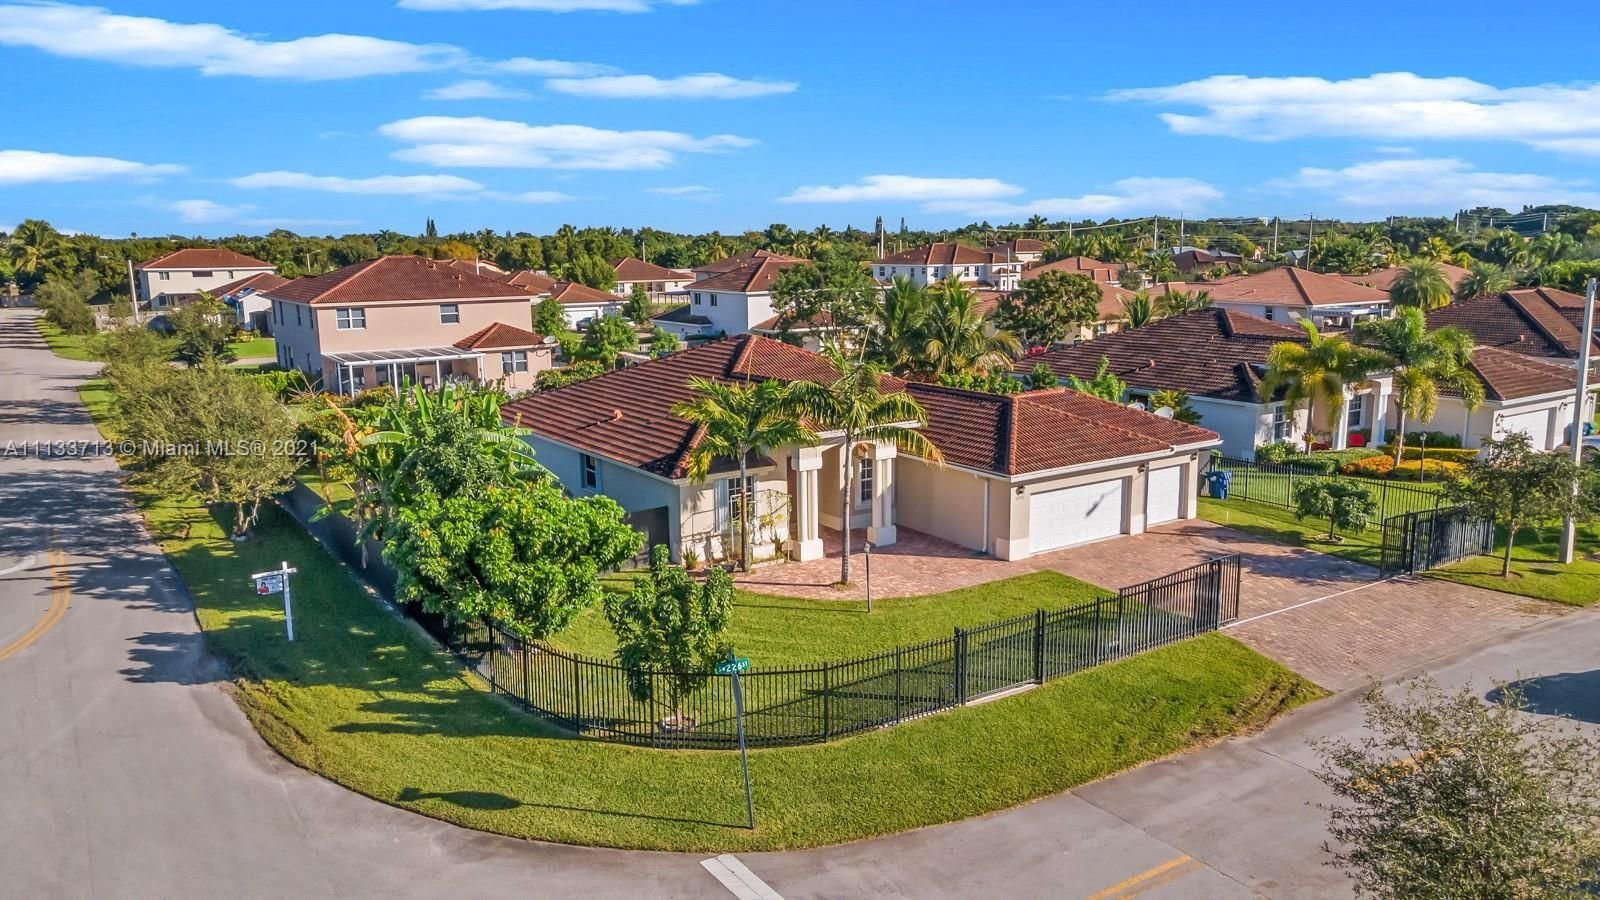 Real estate property located at 12733 226th St, Miami-Dade County, Miami, FL